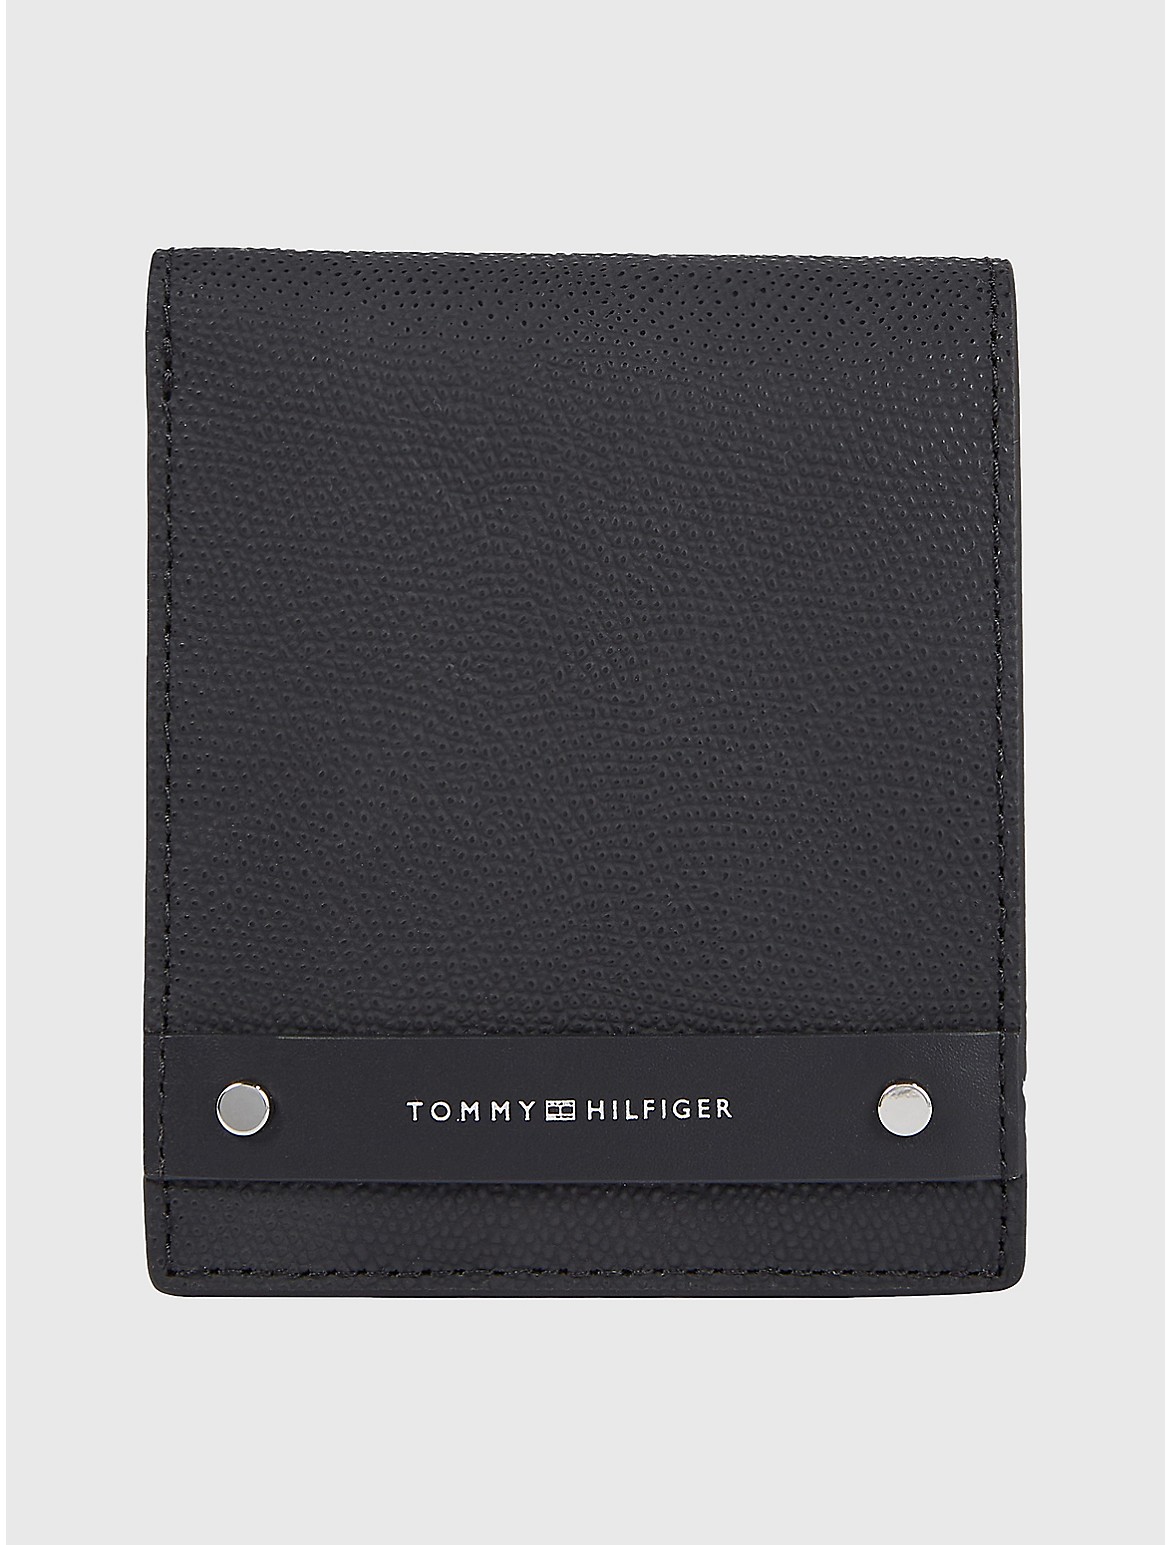 Tommy Hilfiger Men's TH Card Wallet with Coin Pocket - Black